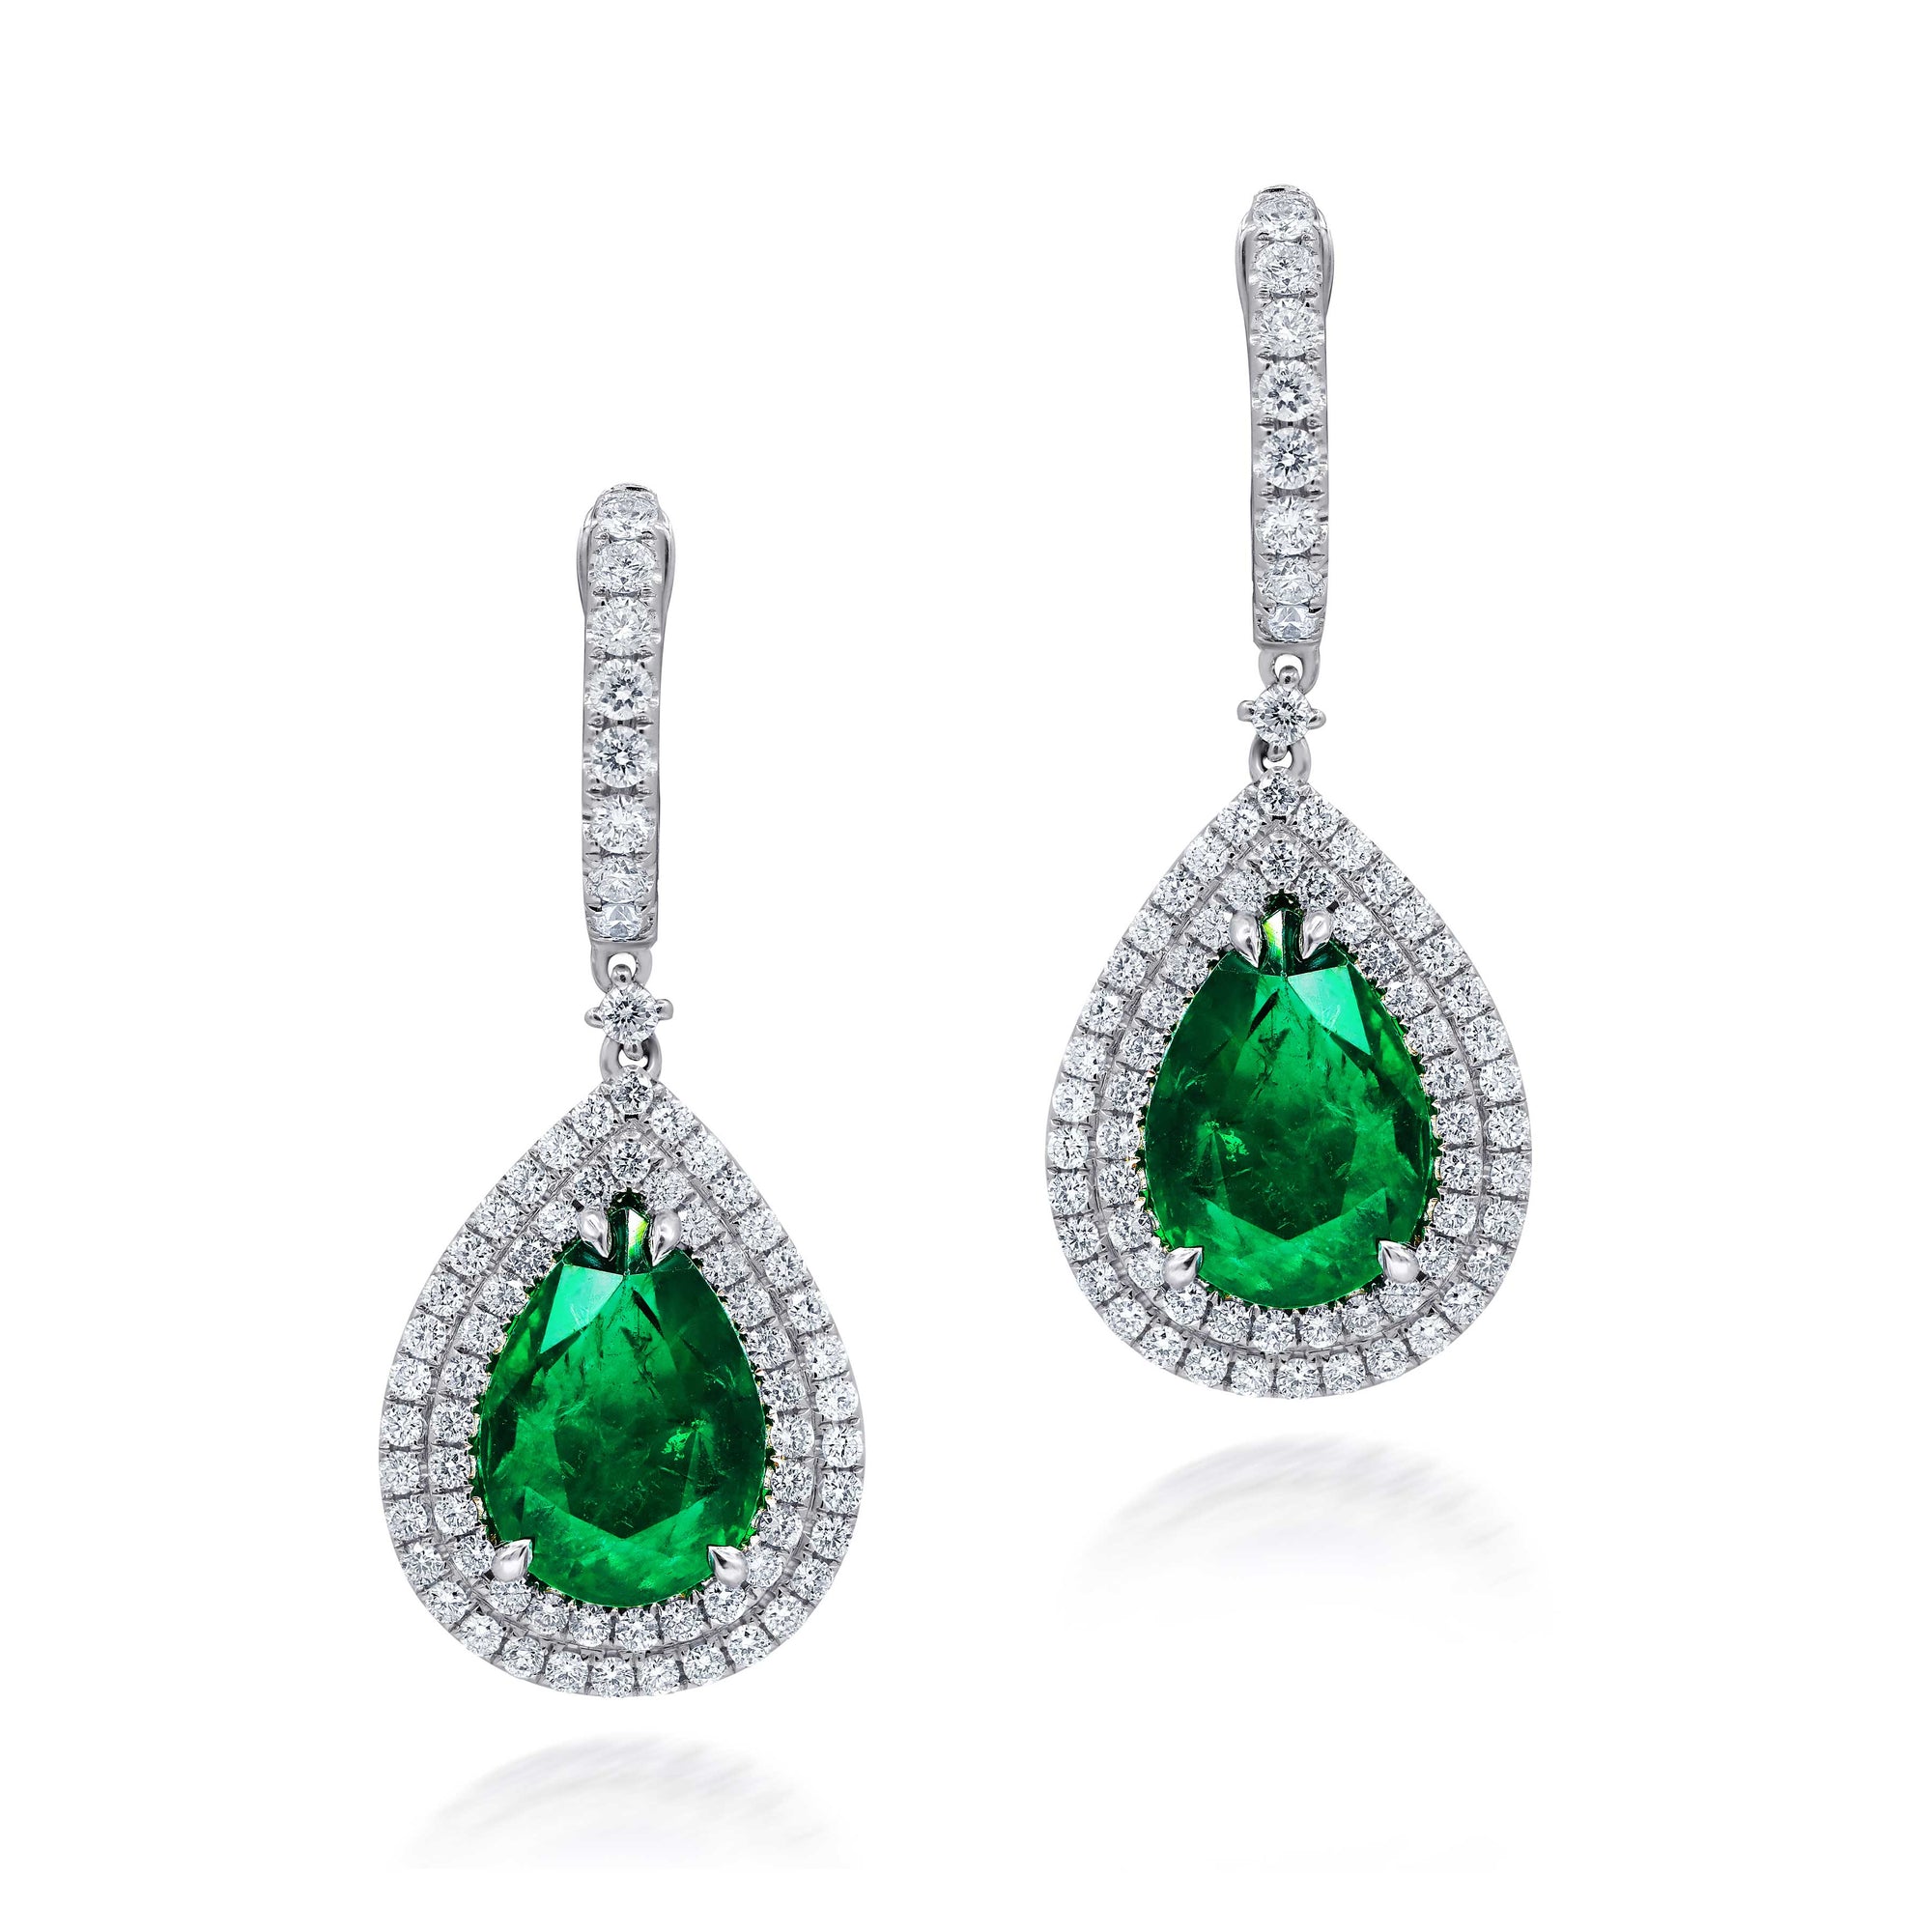 Sell Emerald Earrings in Miami